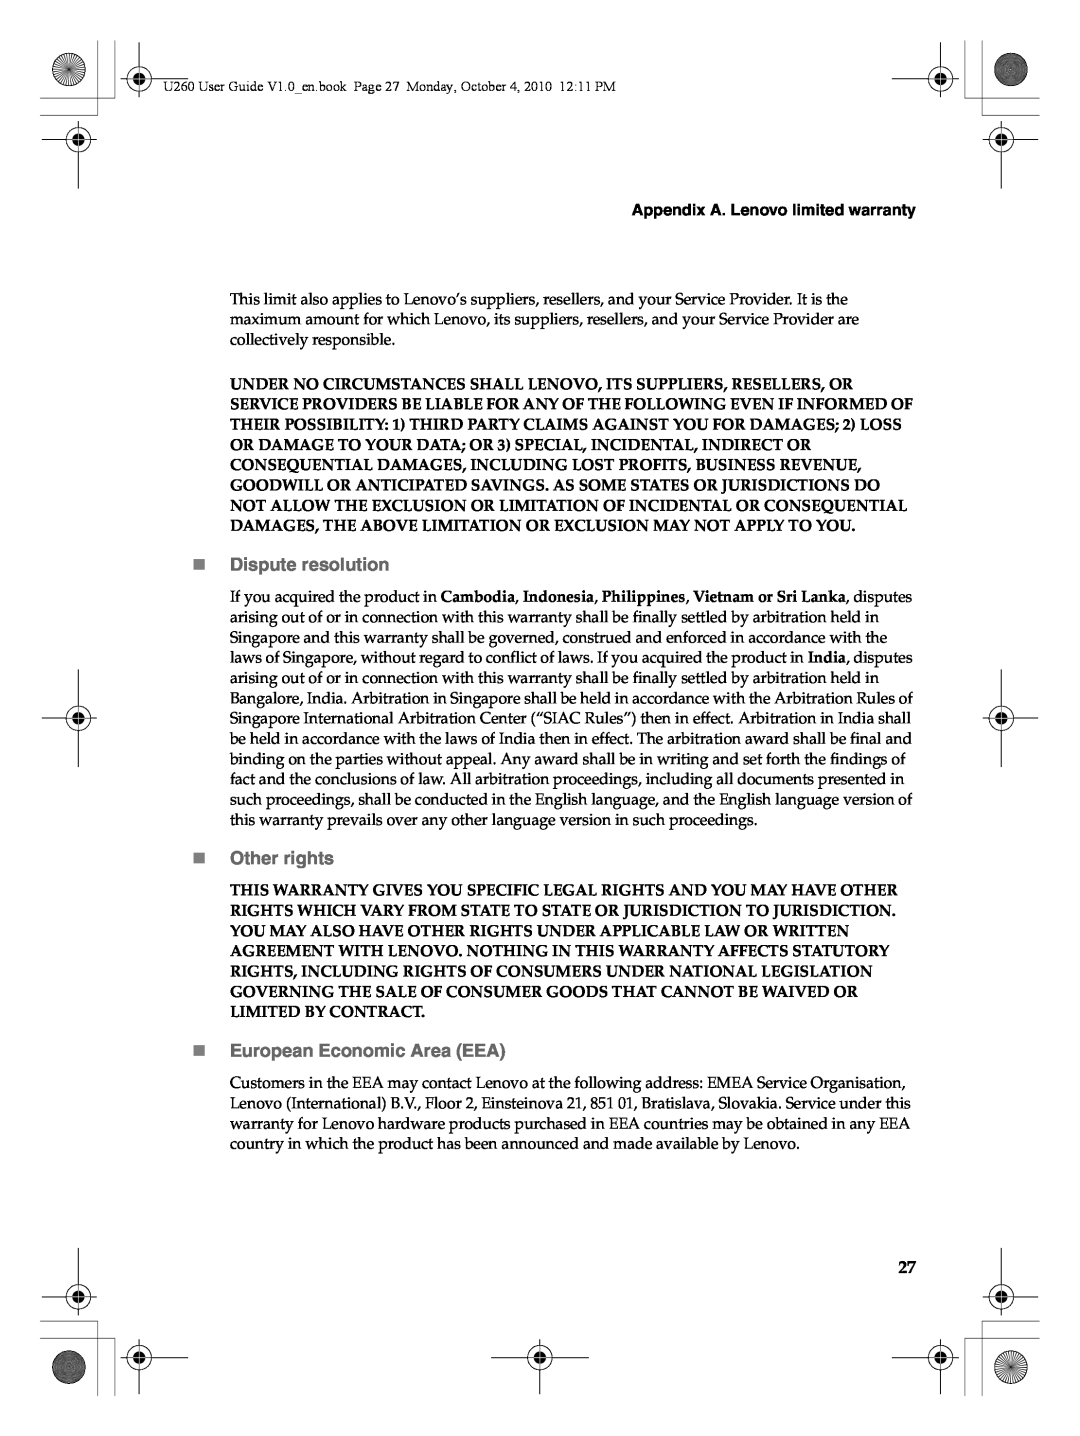 Lenovo U260 manual „Dispute resolution, „Other rights, „European Economic Area EEA, Appendix A. Lenovo limited warranty 